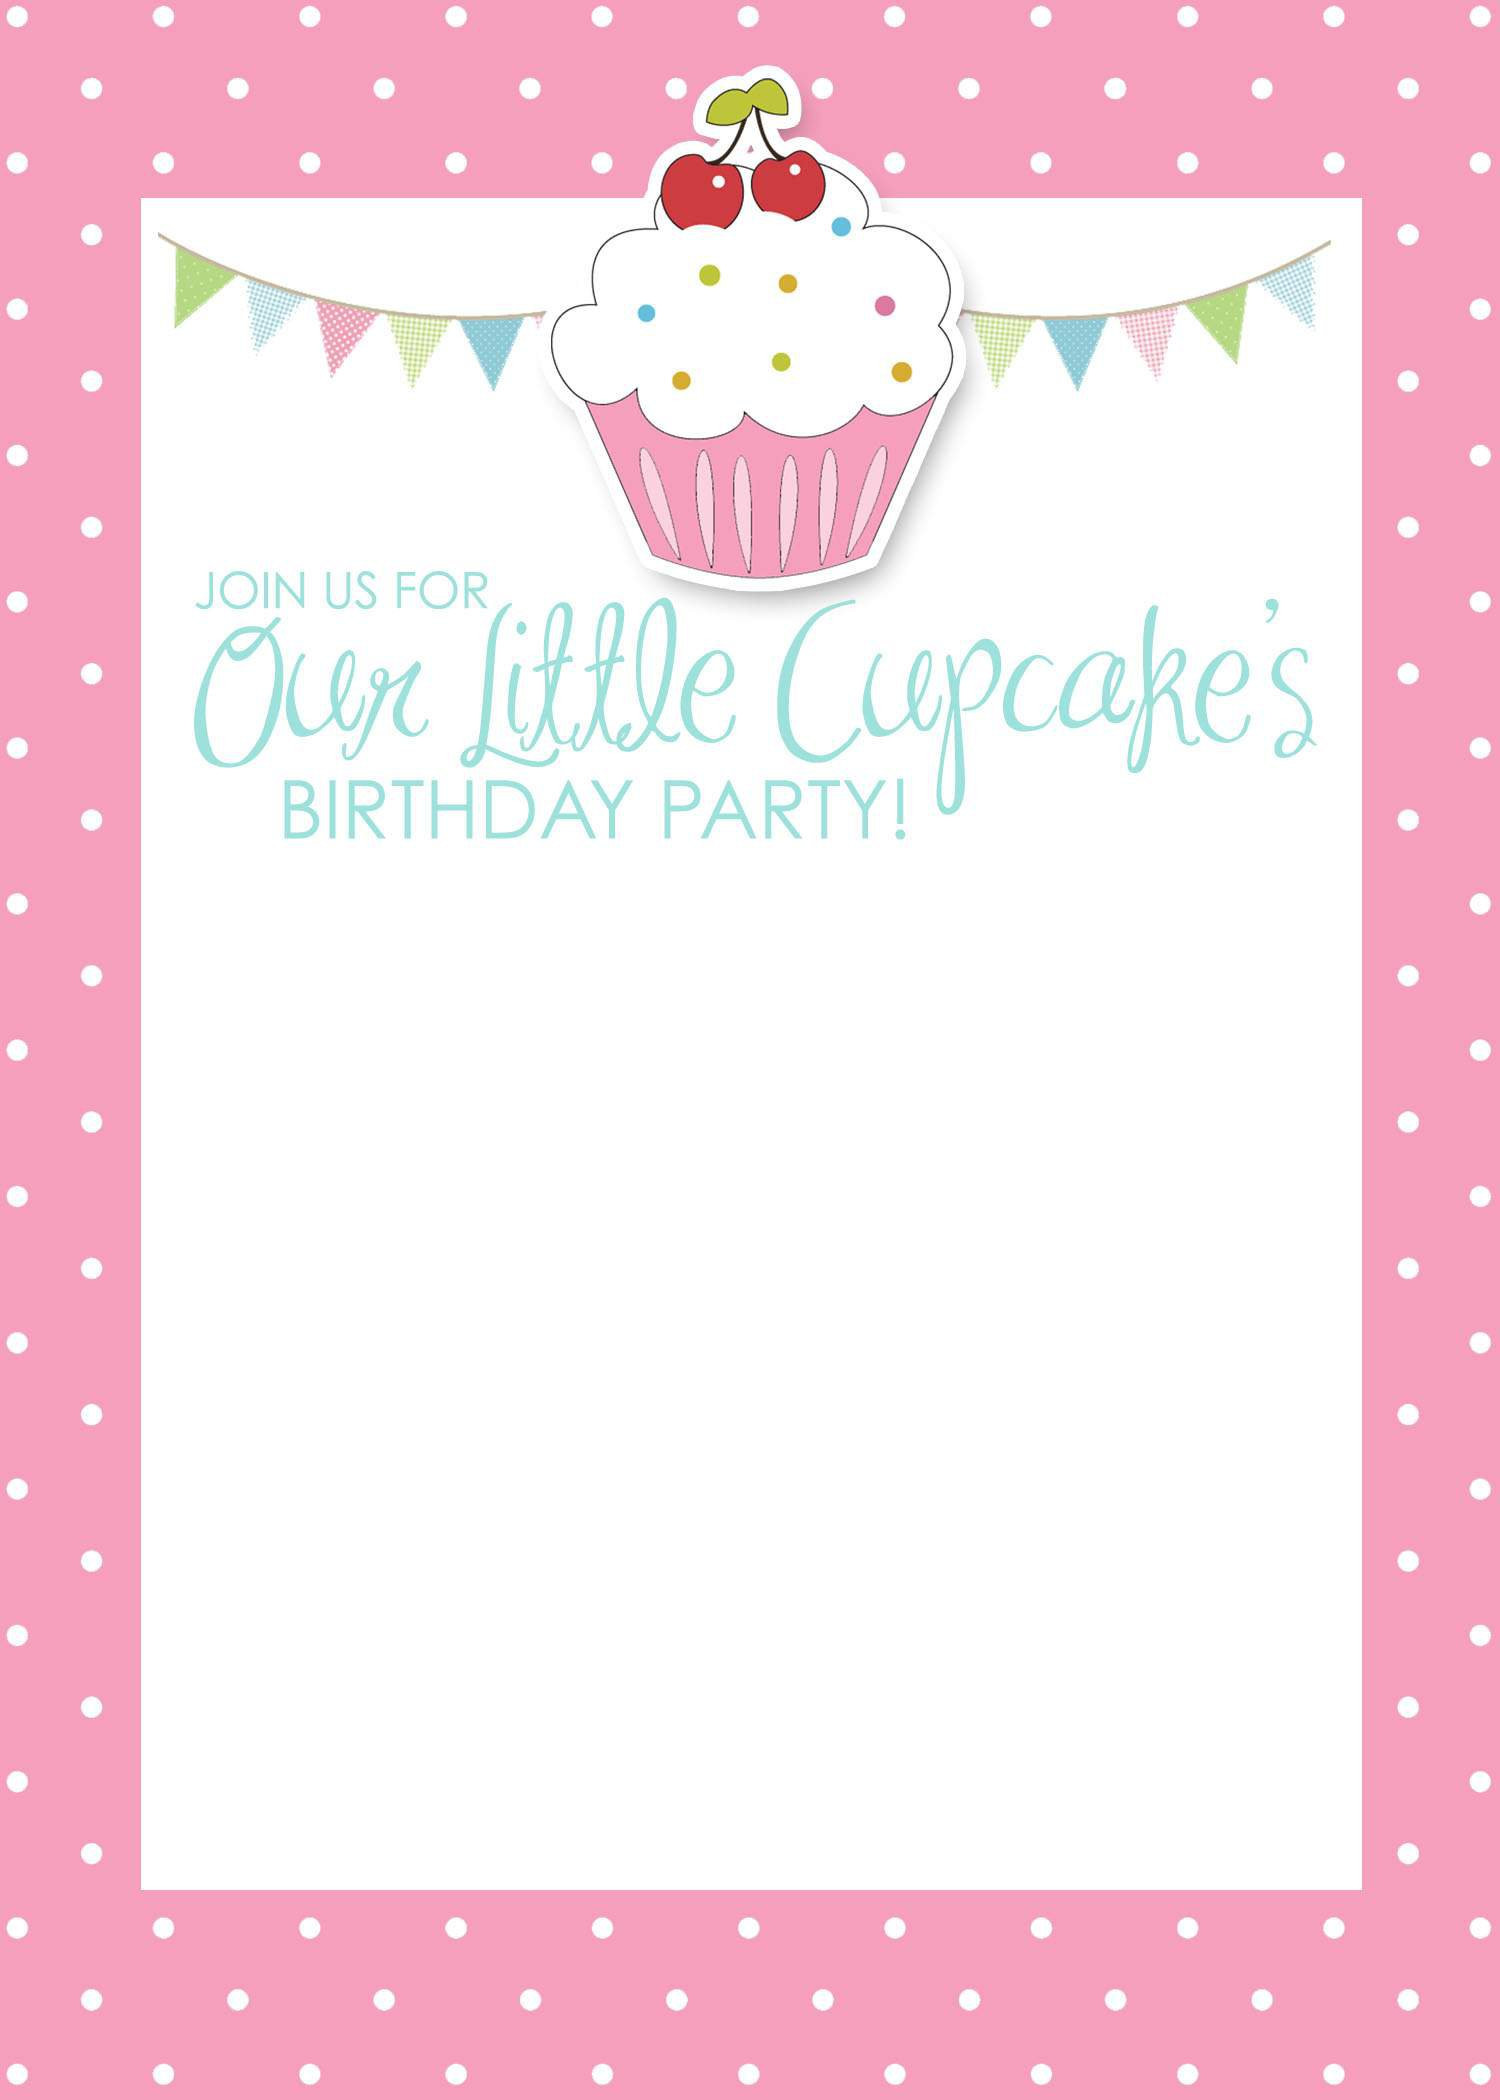 Best ideas about Birthday Invitation Card Template
. Save or Pin birthday invitation card template birthday invitation Now.